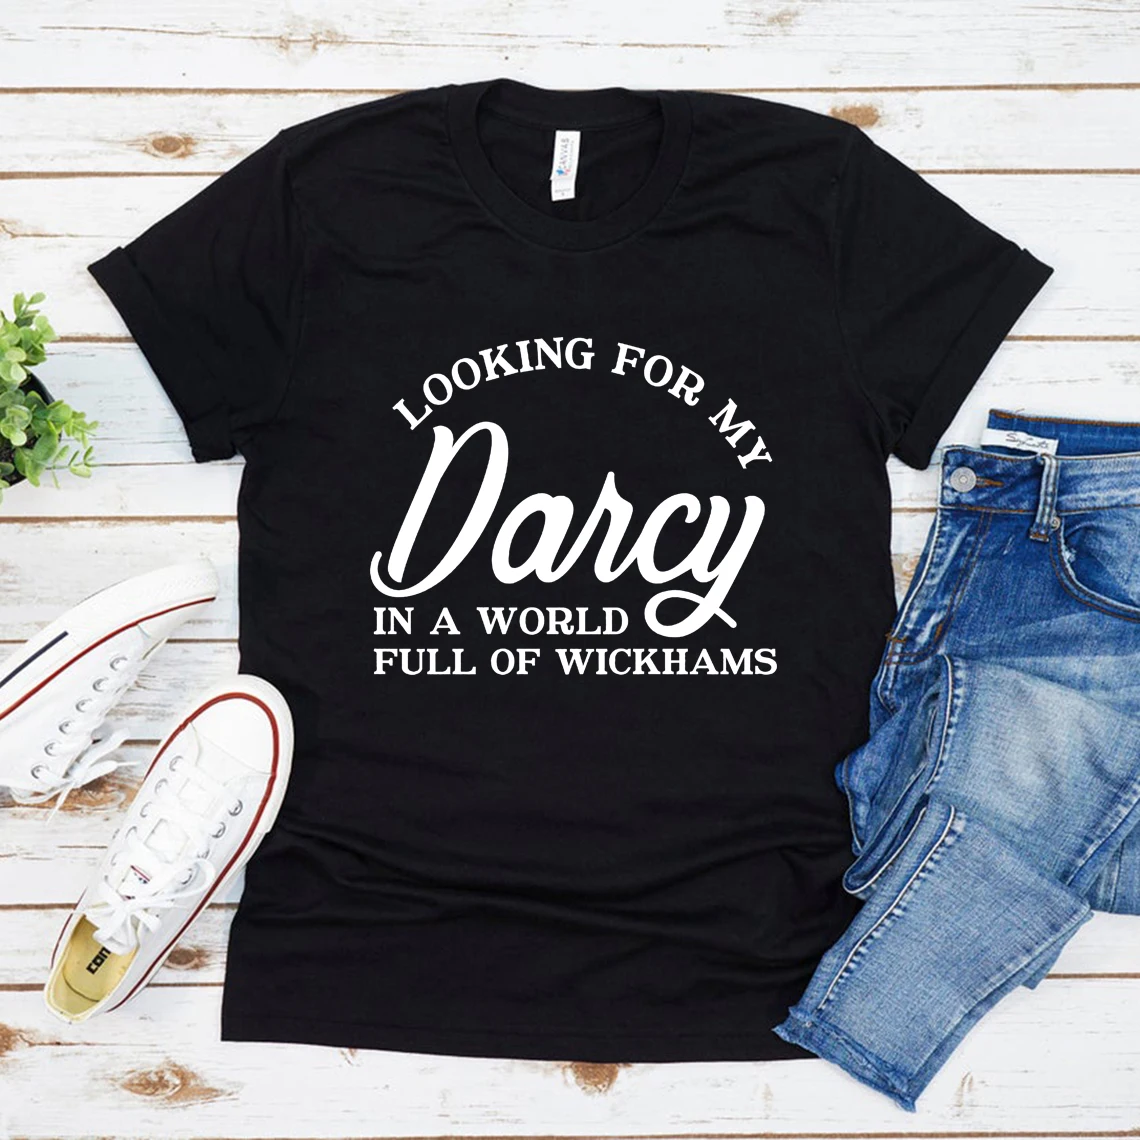 Looking for My Darcy Shirt Jane Austen Fan T Shirt Pride and Prejudice T-shirt In A World Full of Wickhams Tee Harajuku Tshirt cheap t shirts Tees